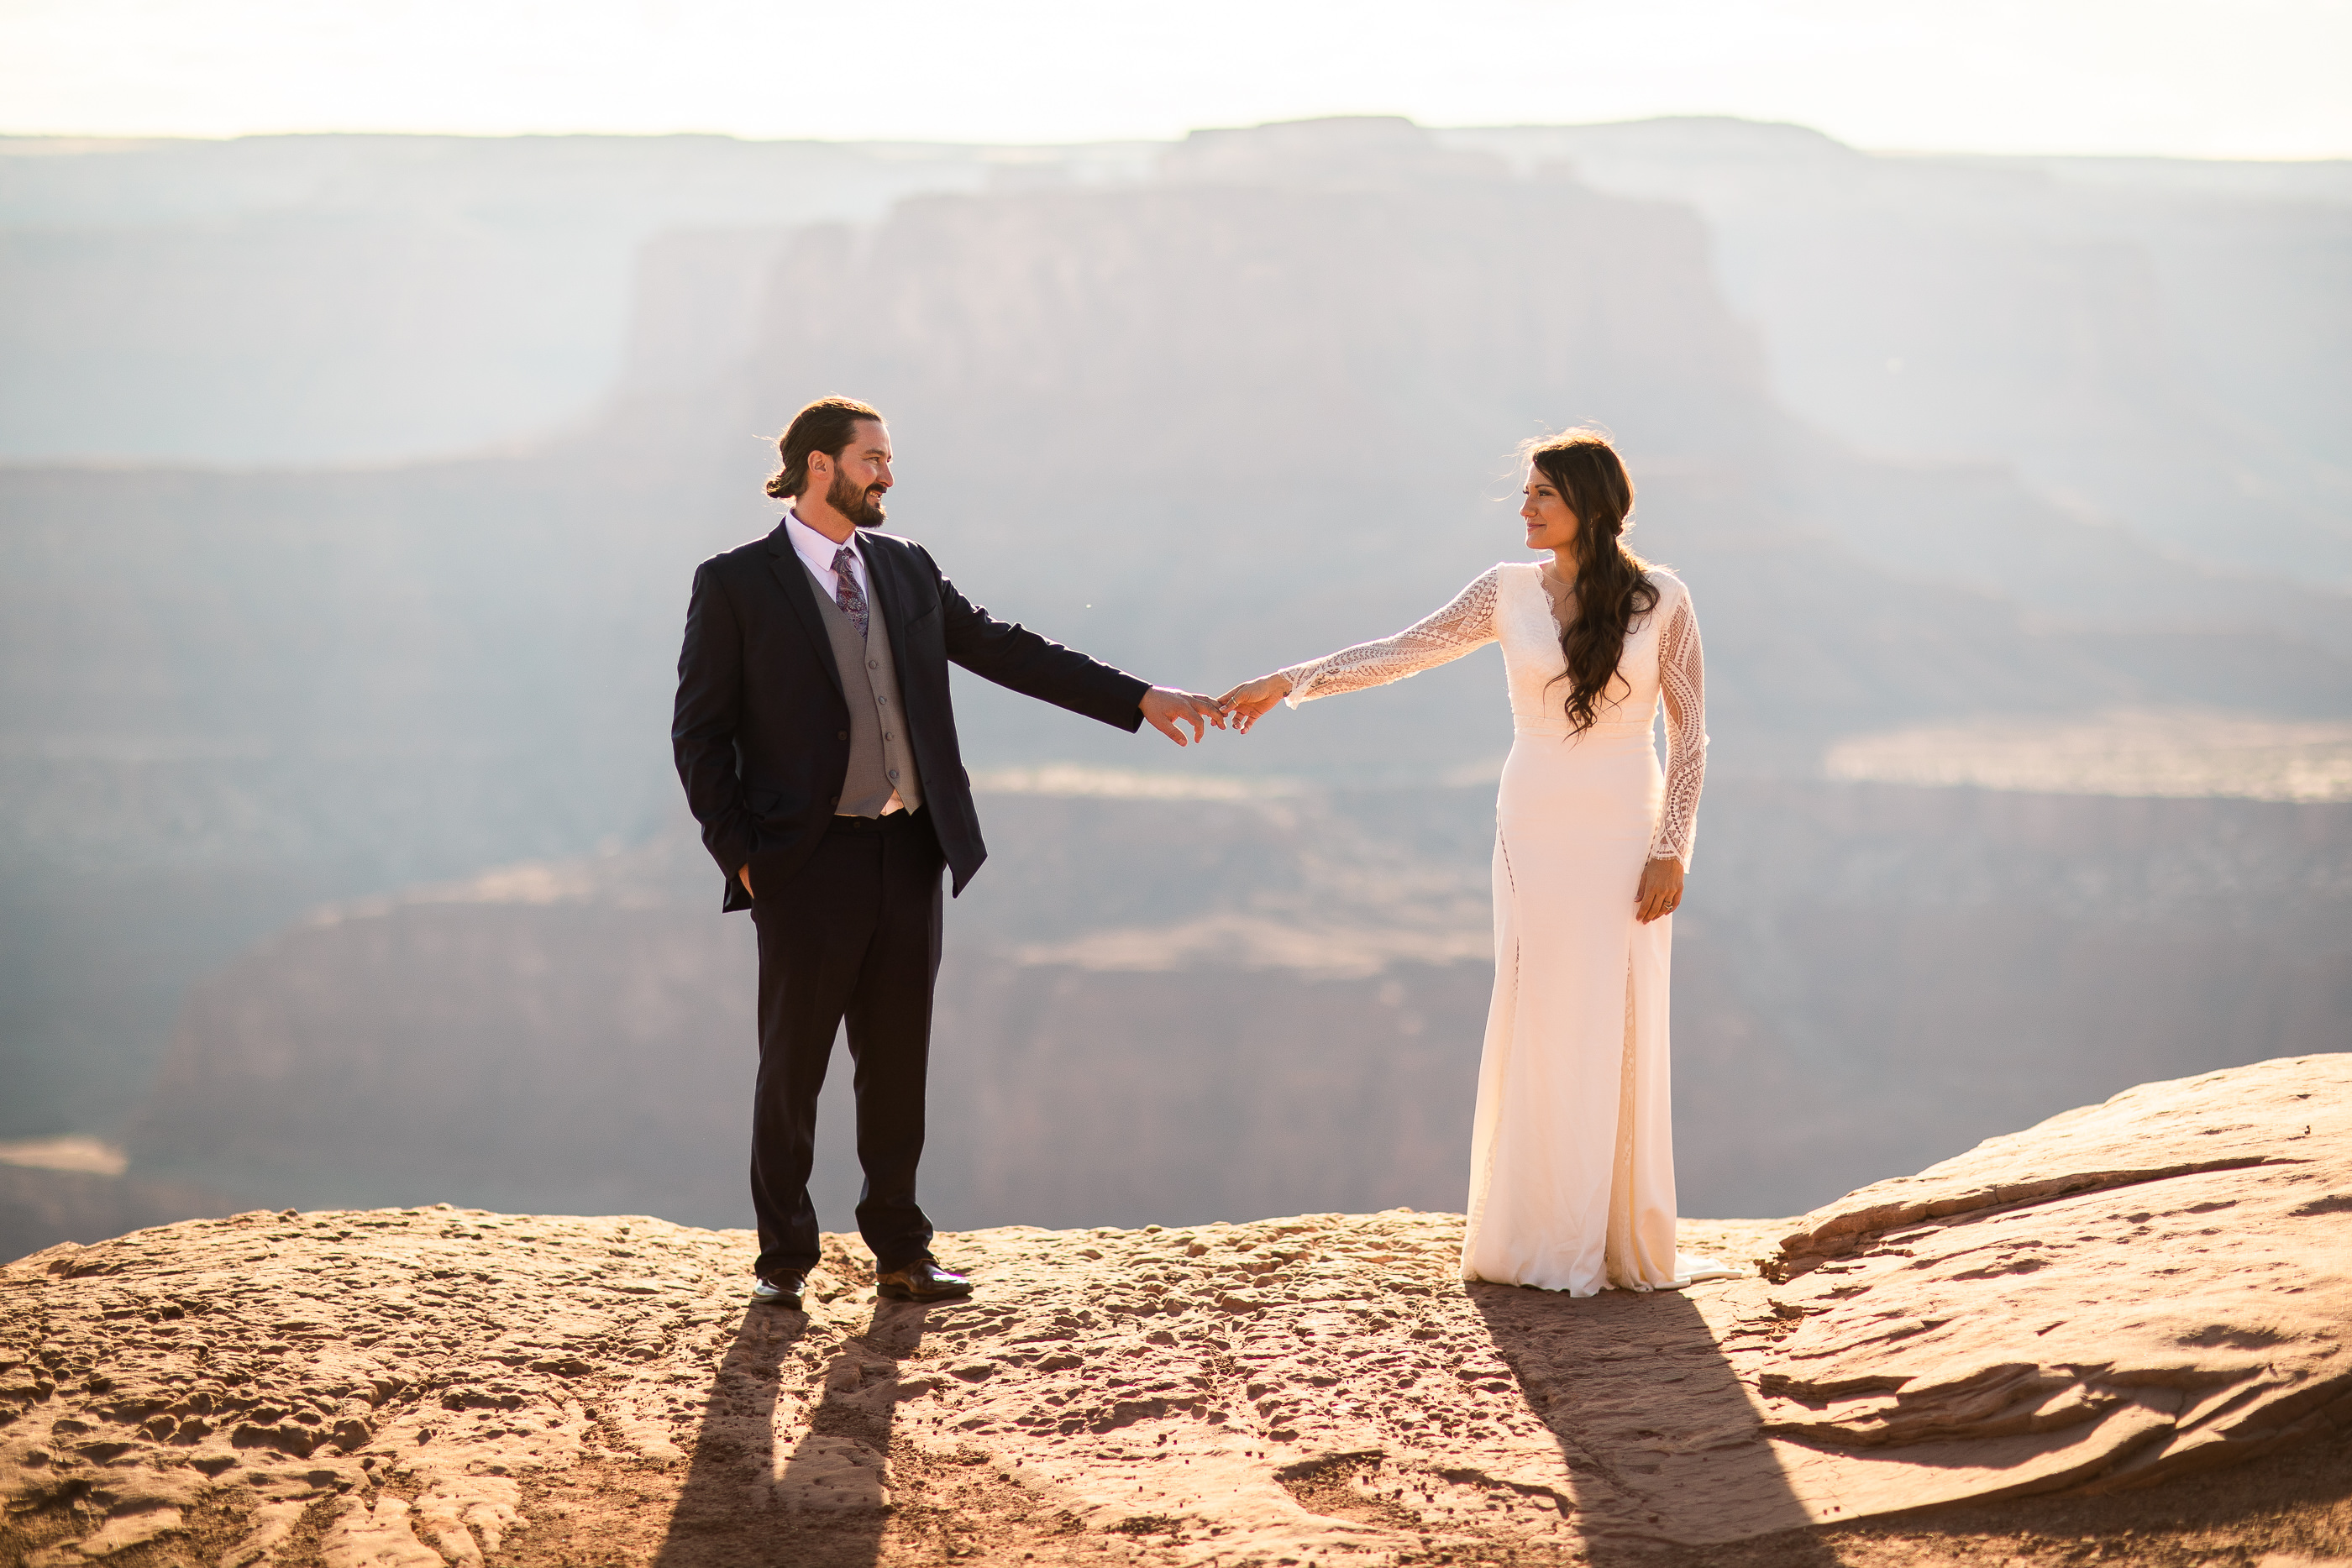 Planning a Destination Wedding in Moab